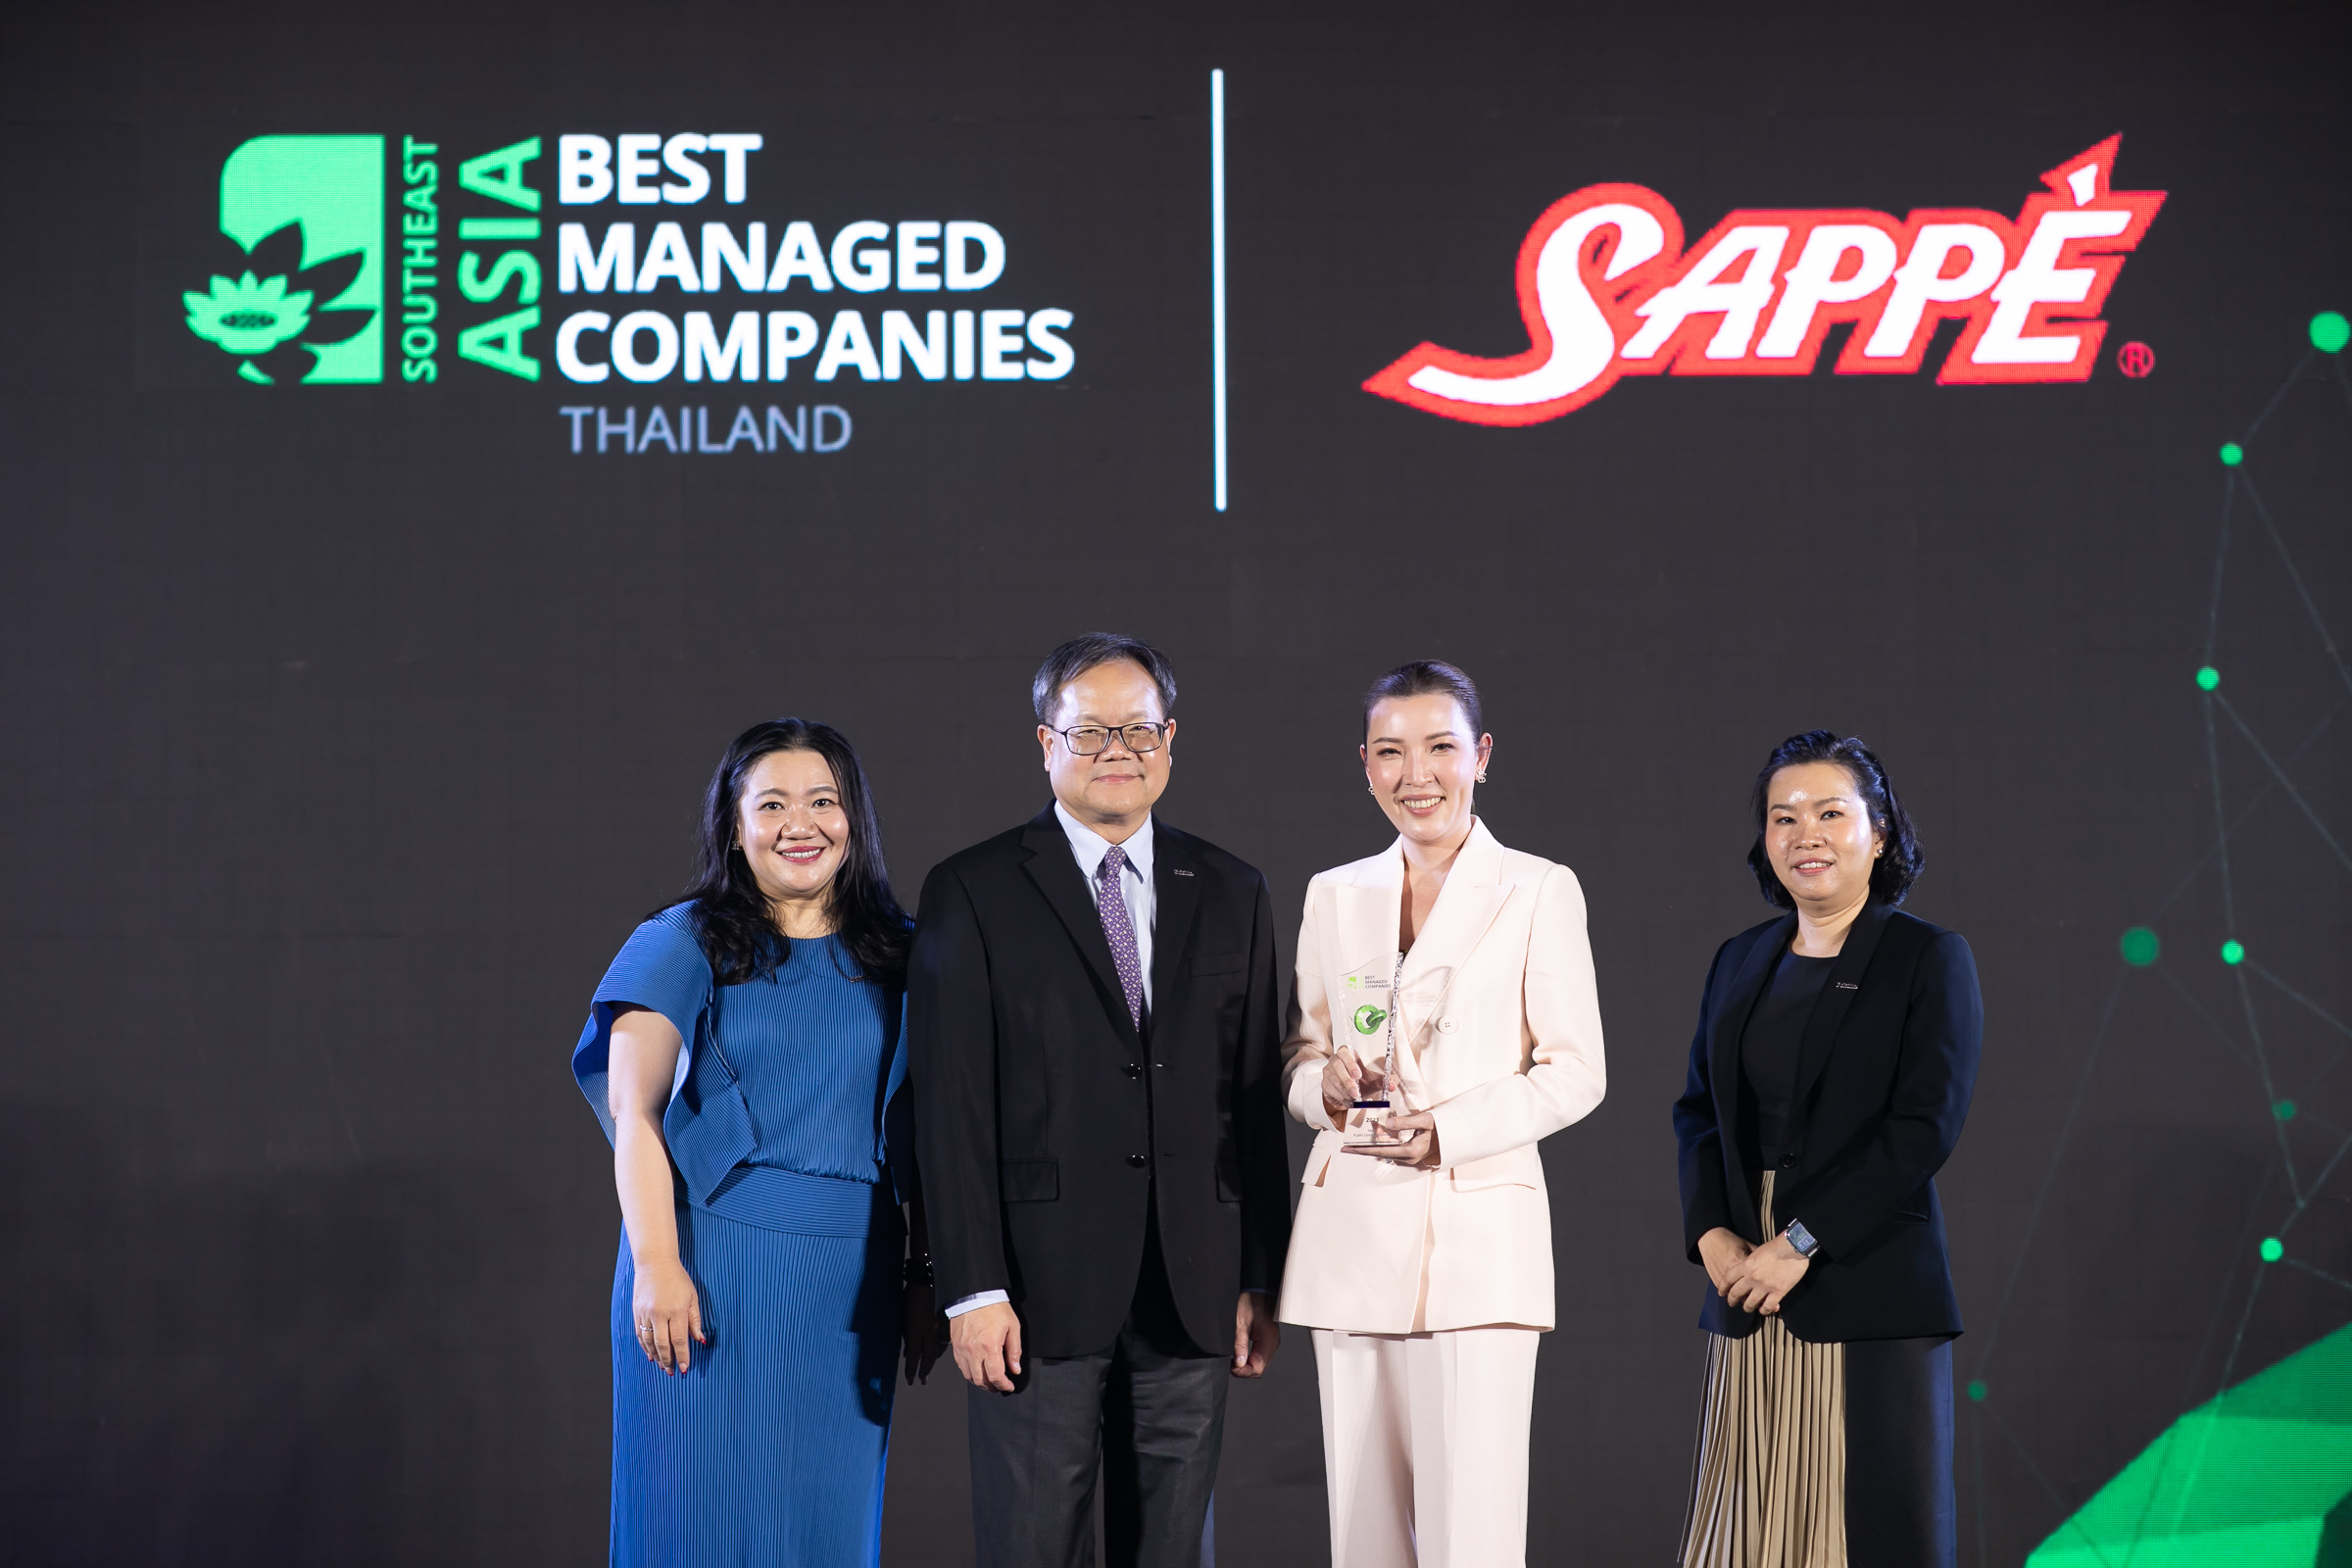 SAPPE บริษัทเอกชนไทยที่มีการบริหารจัดการเป็นเลิศ  คว้ารางวัล “Thailand Best Managed Companies 2023” เป็นปีที่ 2